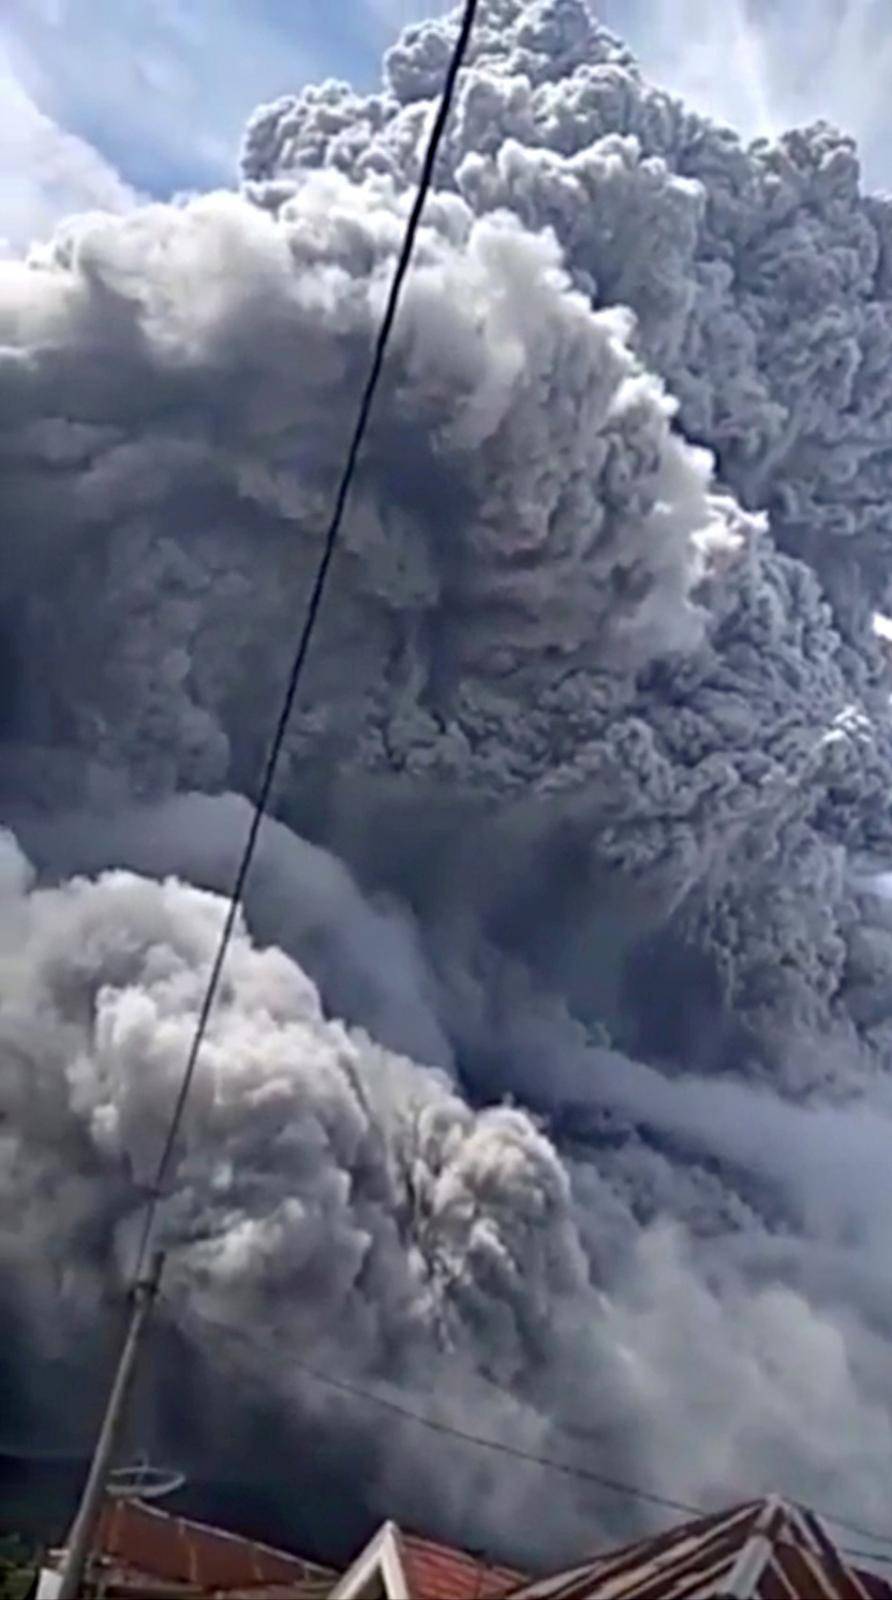 Sinabung volcano spews volcanic ash during eruption in Karo, North Sumatra province, Indonesia